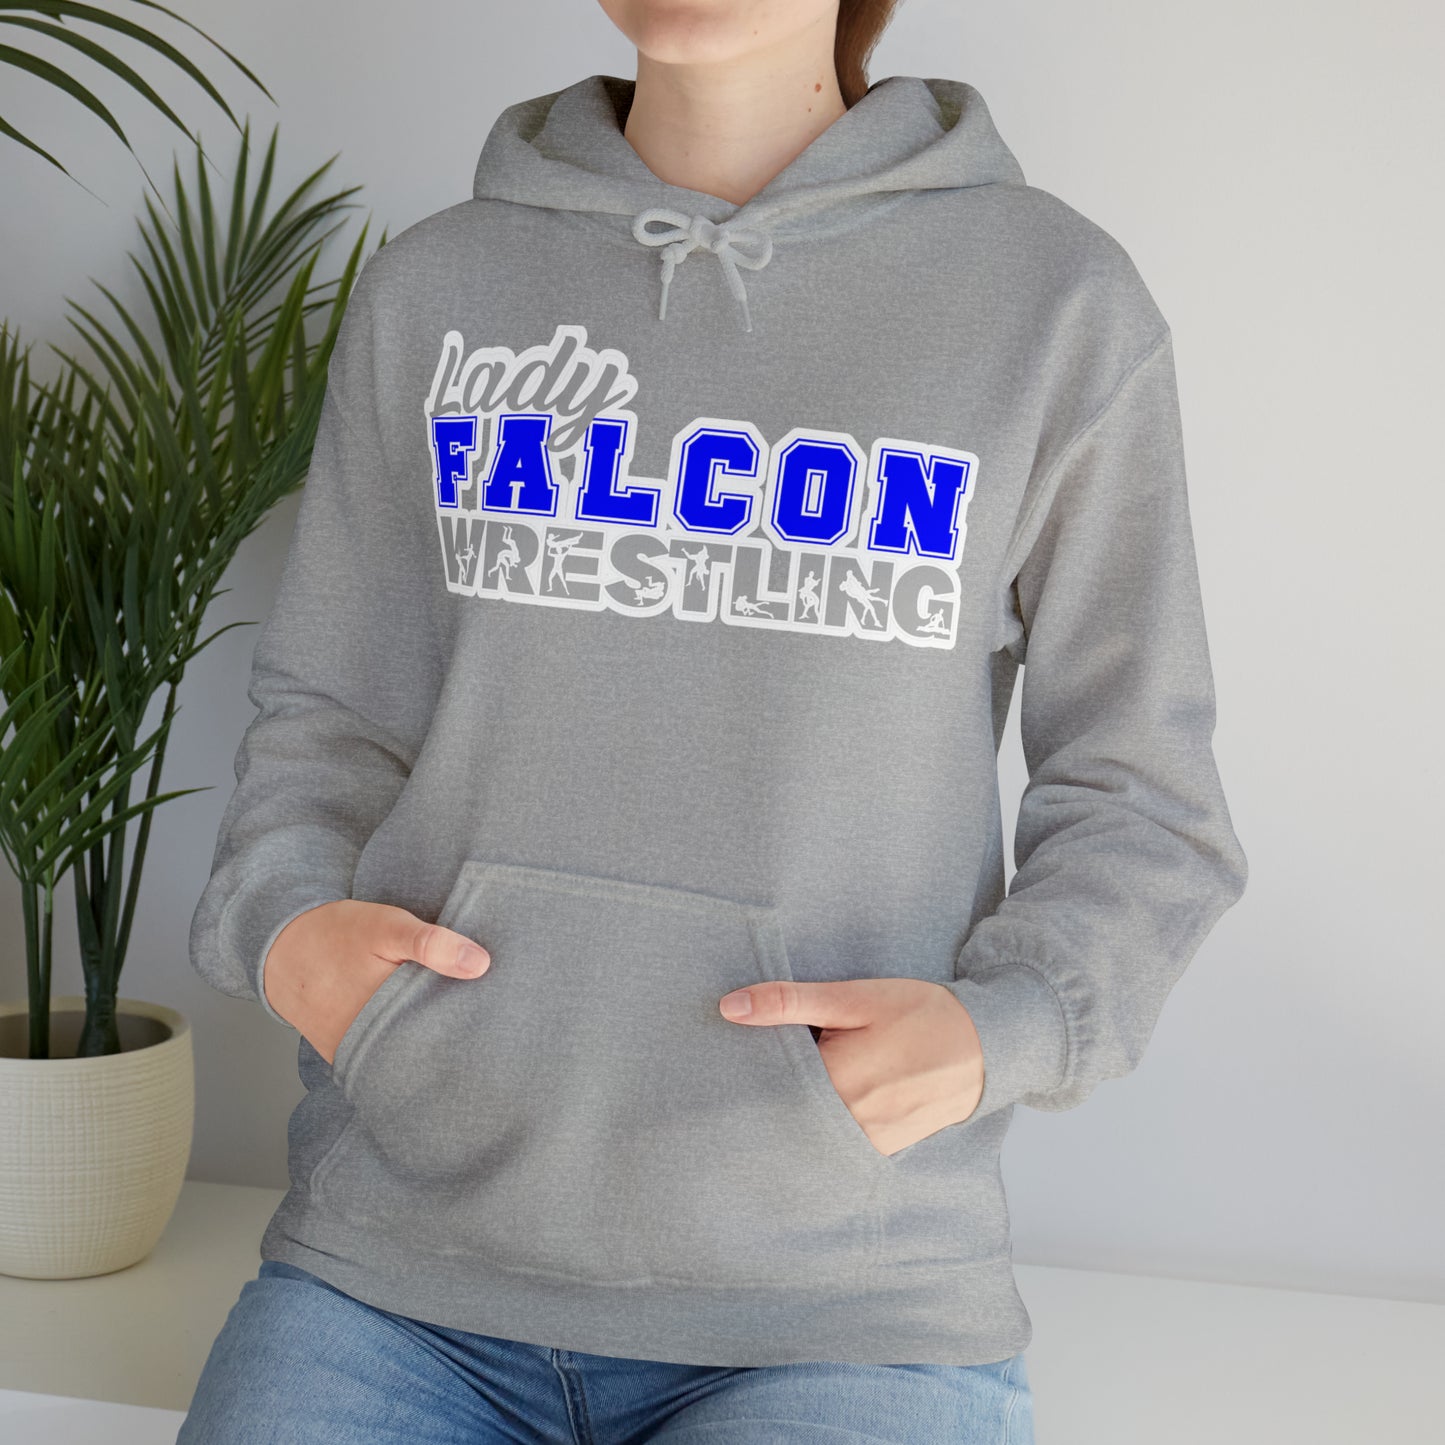 Lady Falcon Wrestling 2-Sided: Unisex Heavy Blend™ Hooded Sweatshirt